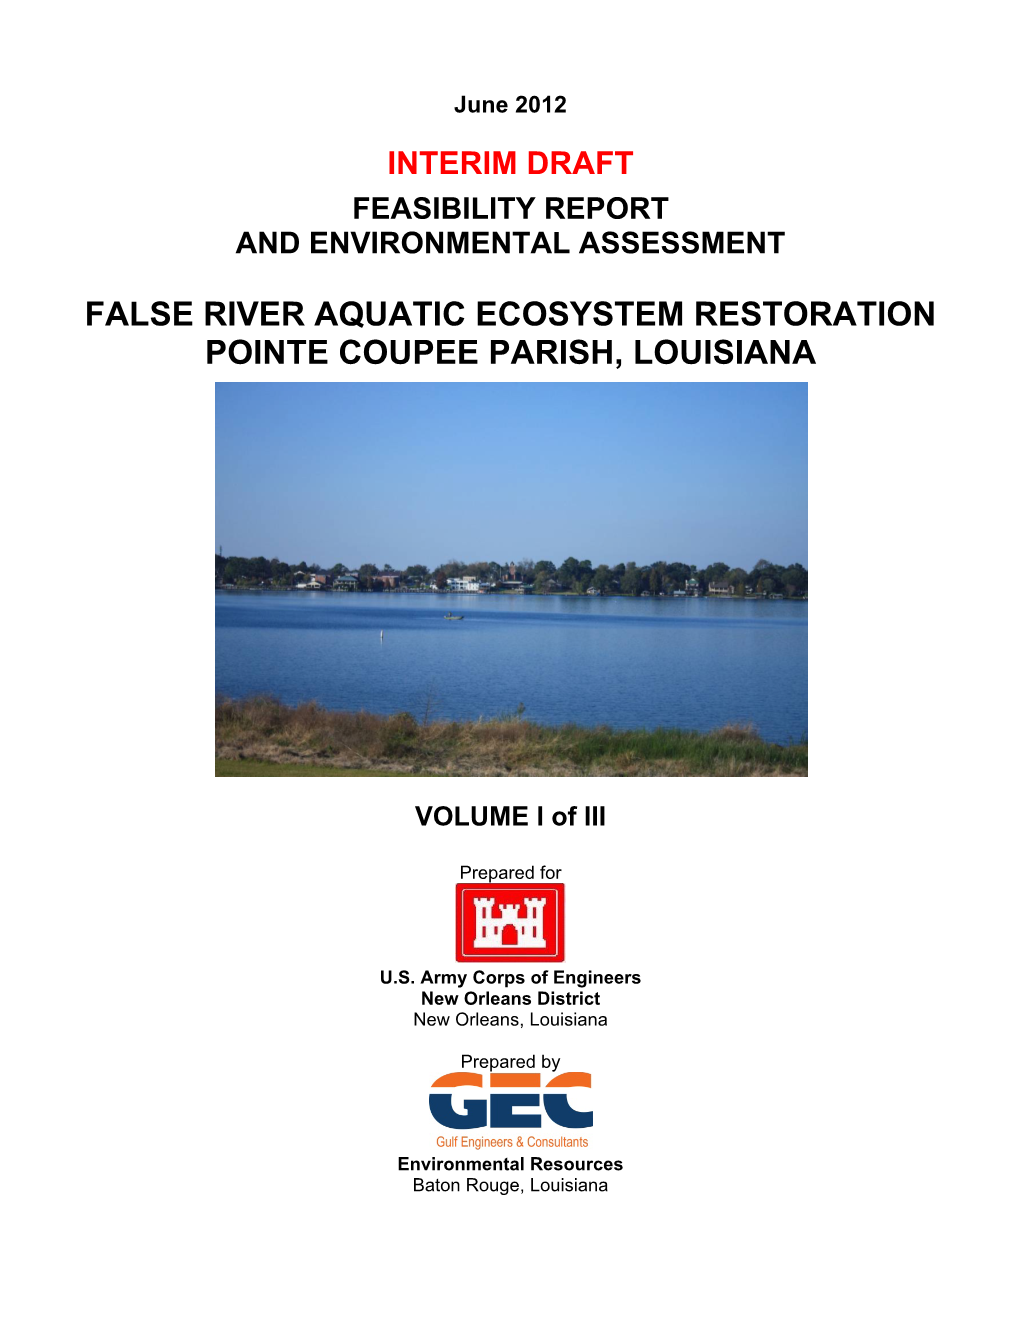 False River Aquatic Ecosystem Restoration Pointe Coupee Parish, Louisiana